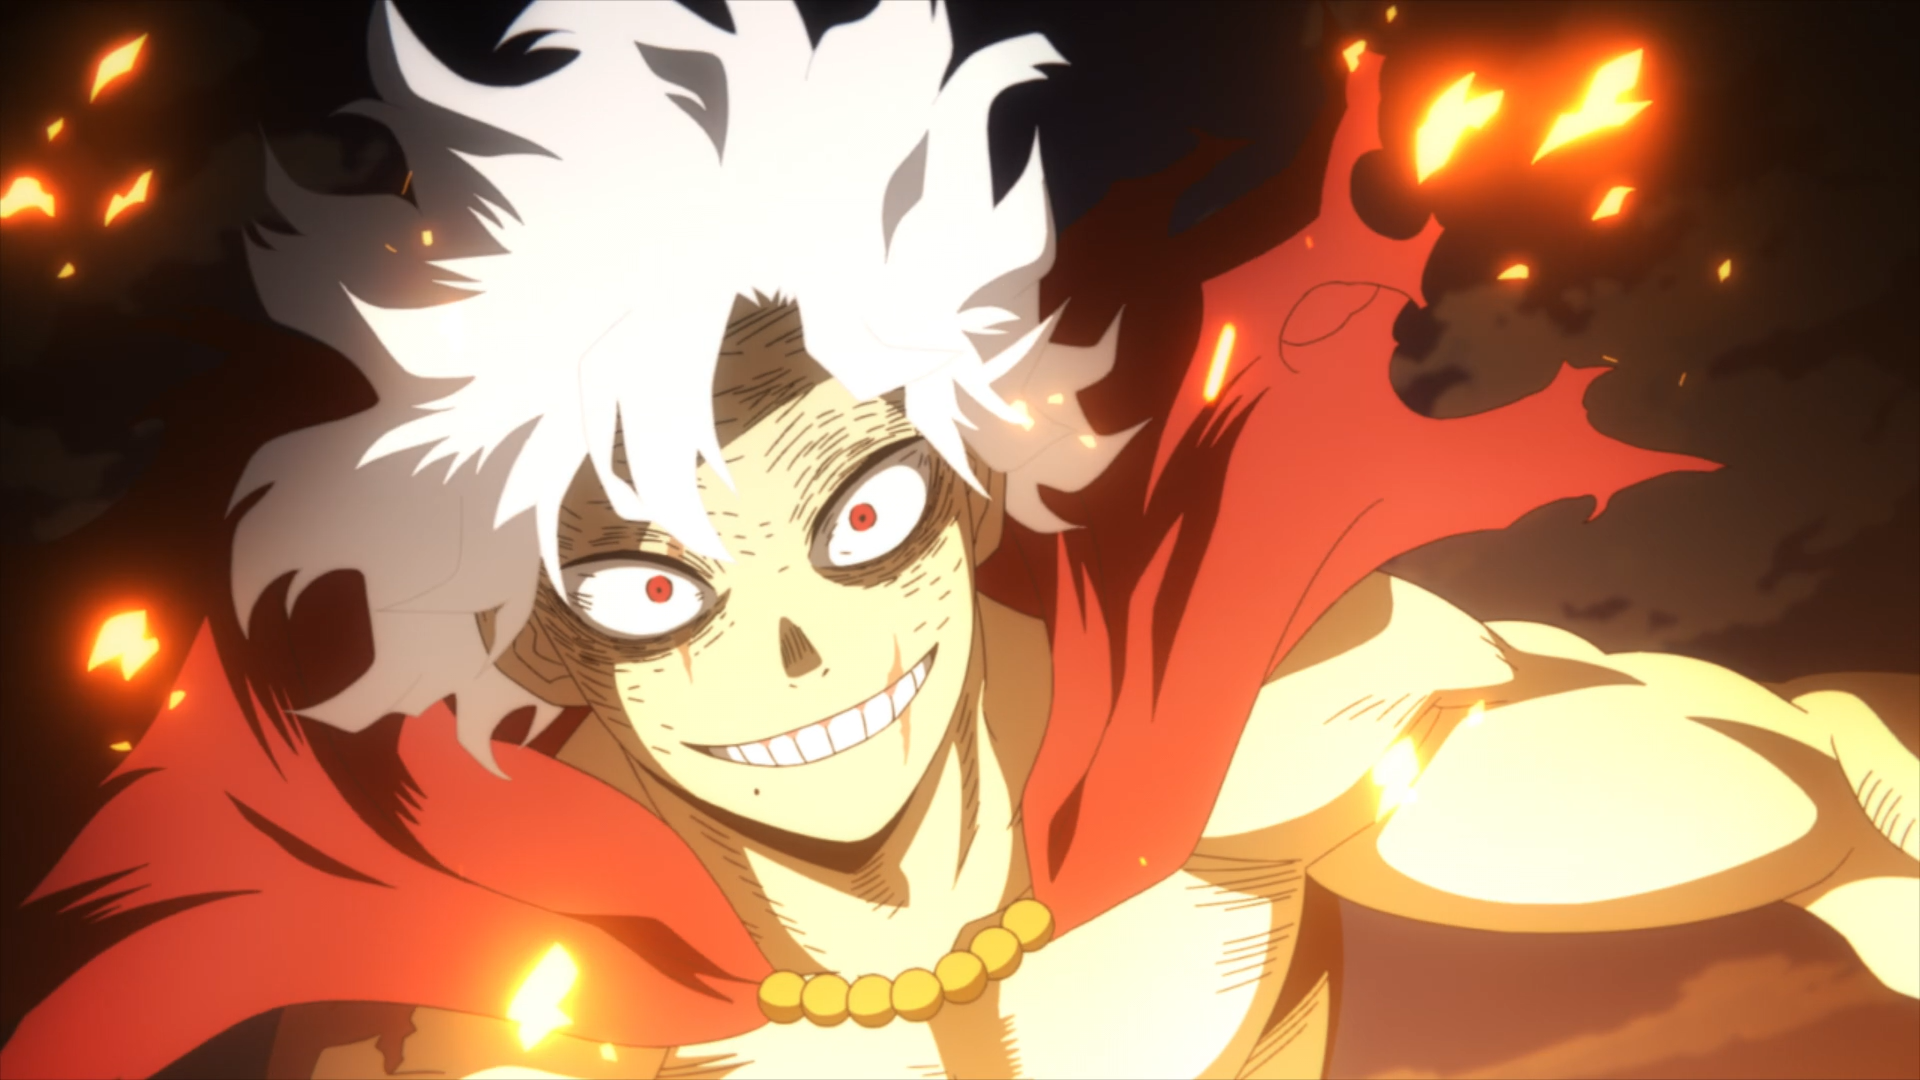 My Hero Academia': New OVA Episodes to Stream on Crunchyroll Ahead of  Season 6